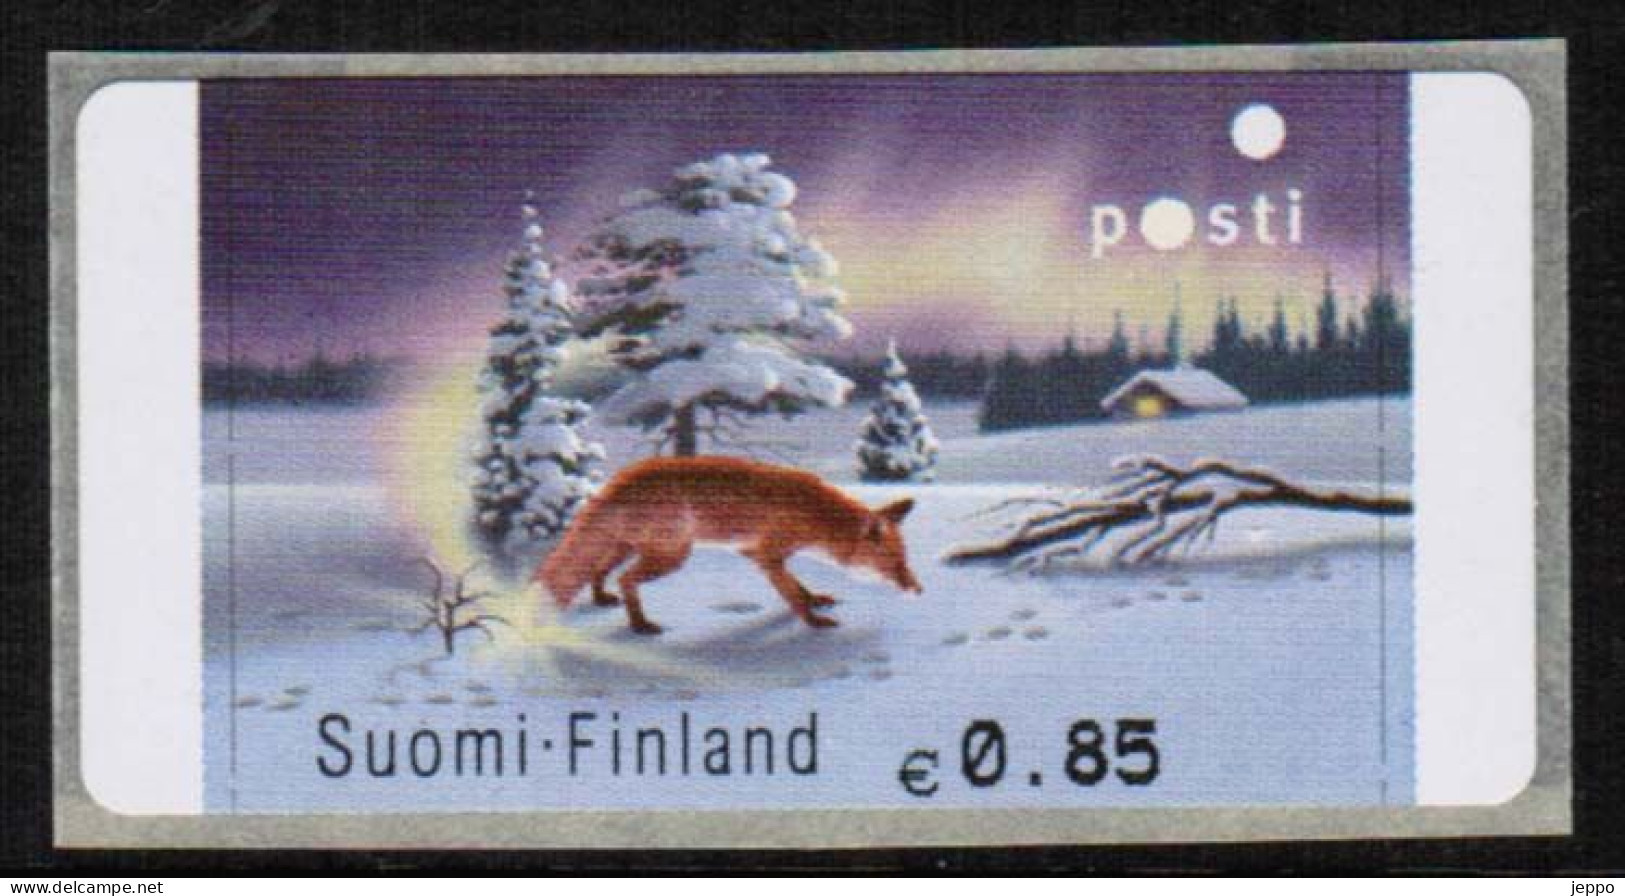 2002 Finland ATM Michel 39, Red Fox  Scarce Amiel Sima Printing Label   **. - Vignette [ATM]